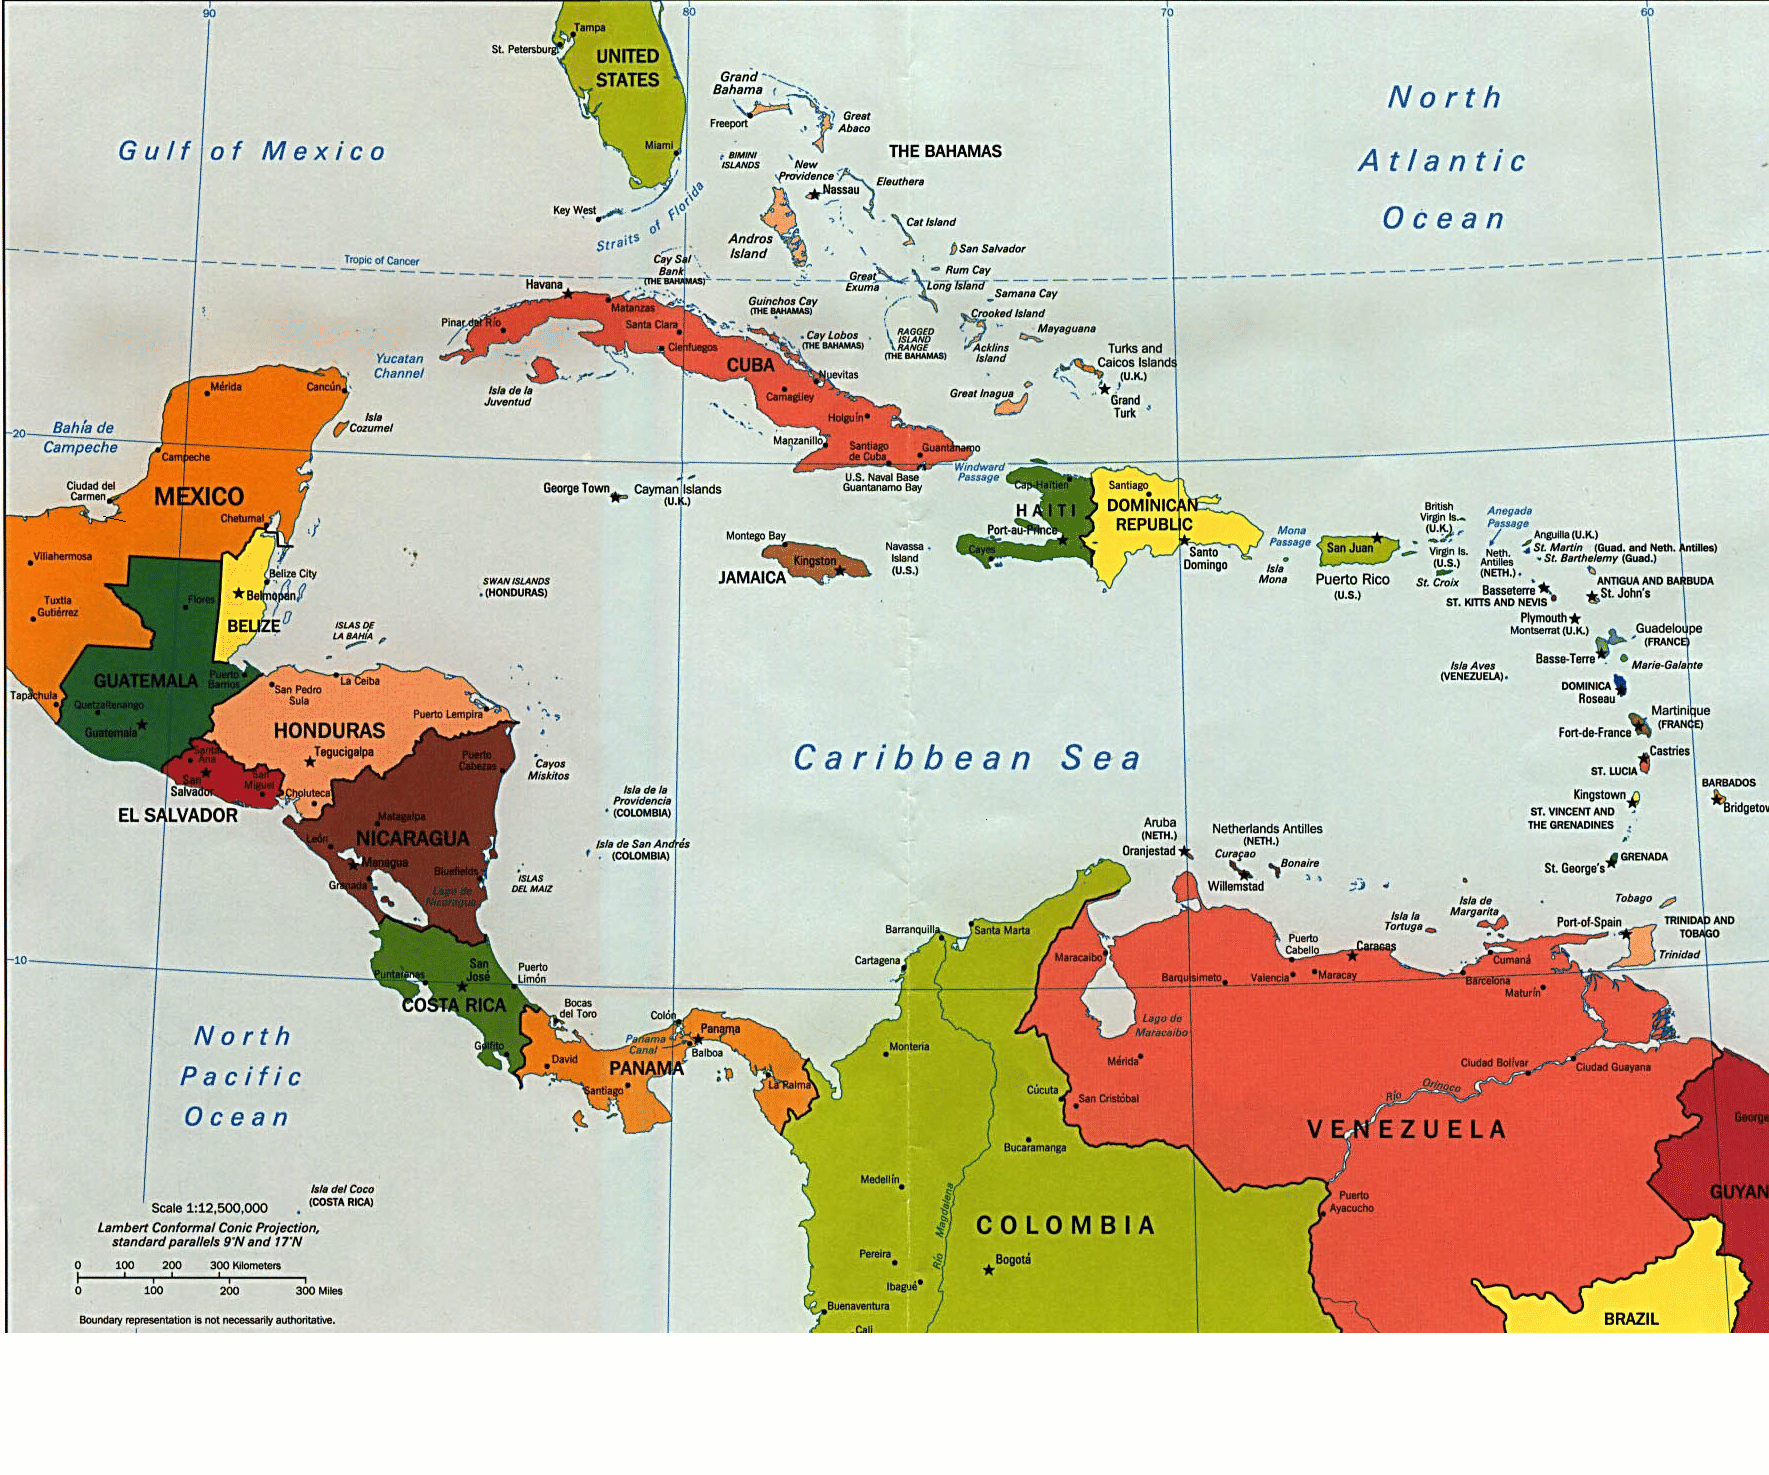 Imagemap of tropics